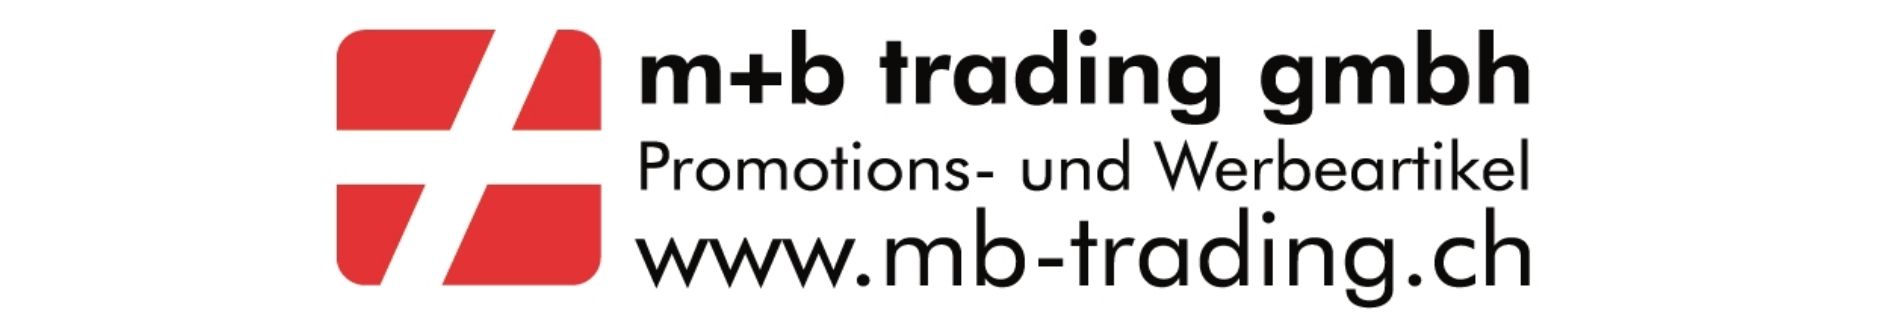 m+b trading gmbh Logo